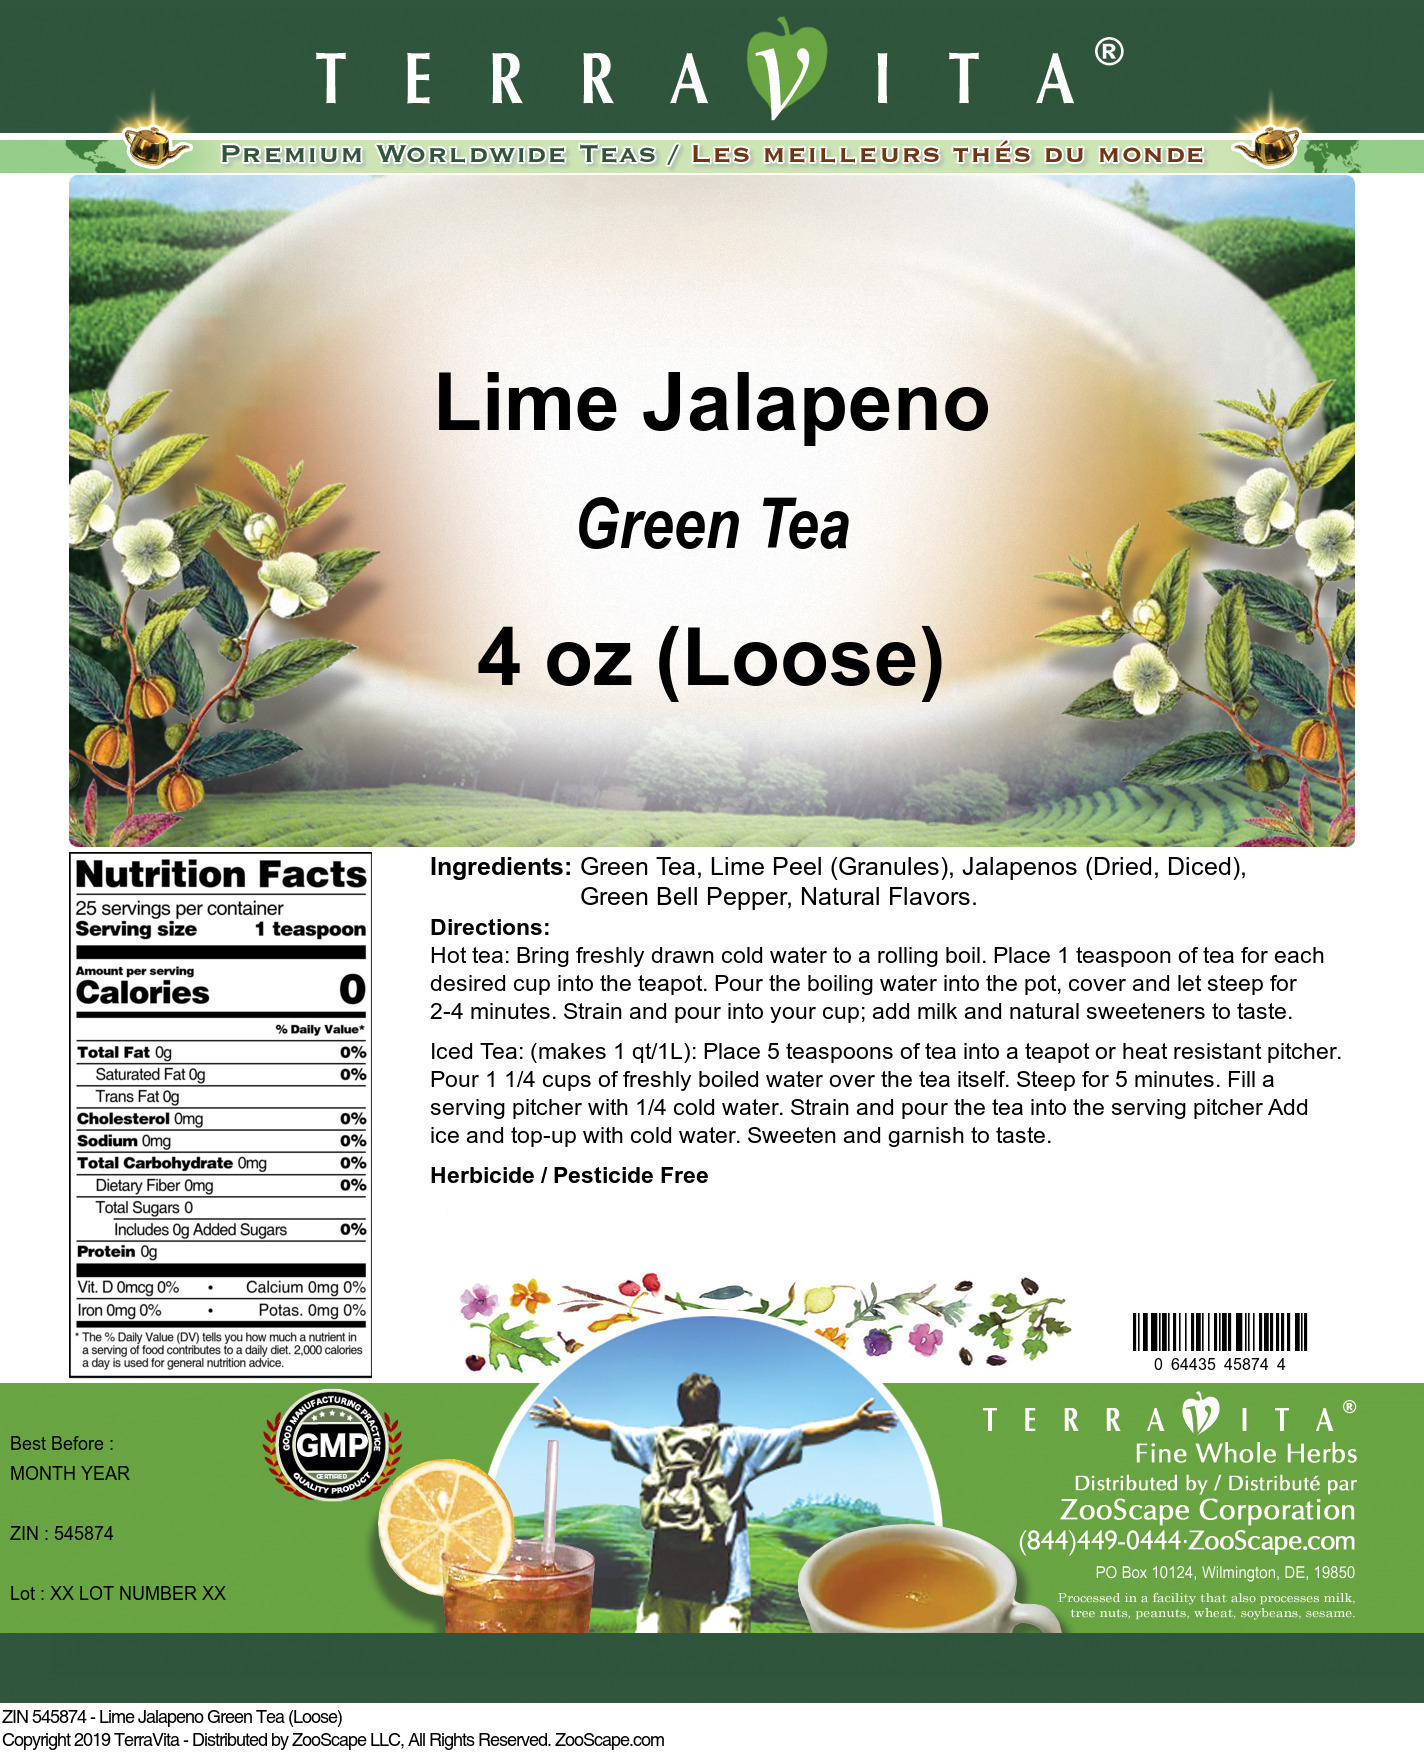 Lime Jalapeno Green Tea (Loose) - Label